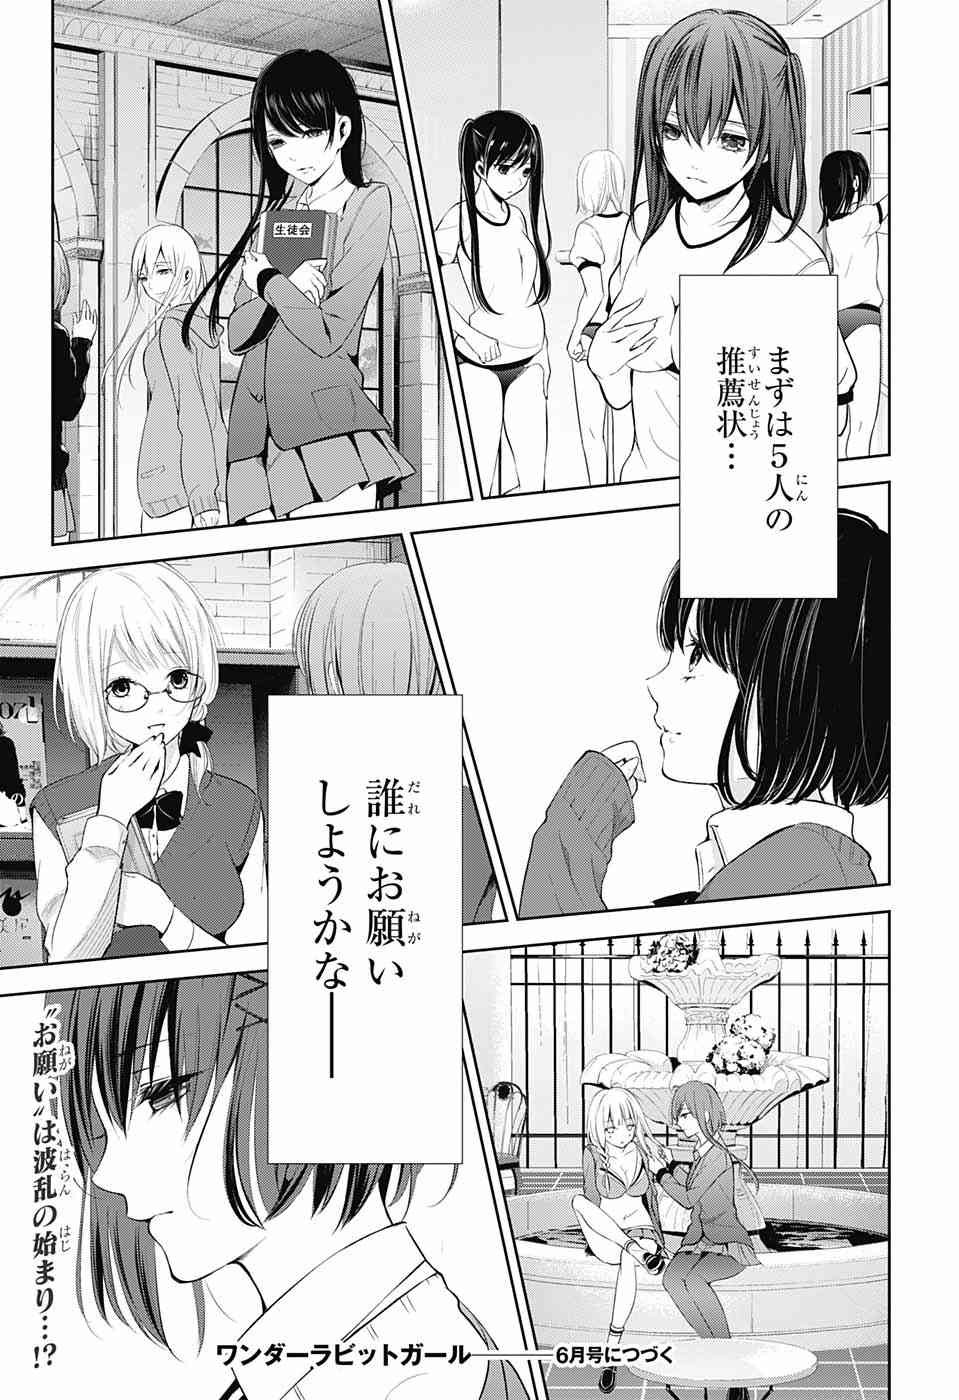 Wonder Rabbit Girl - ワンダーラビットガール - Chapter 12 - Page 32